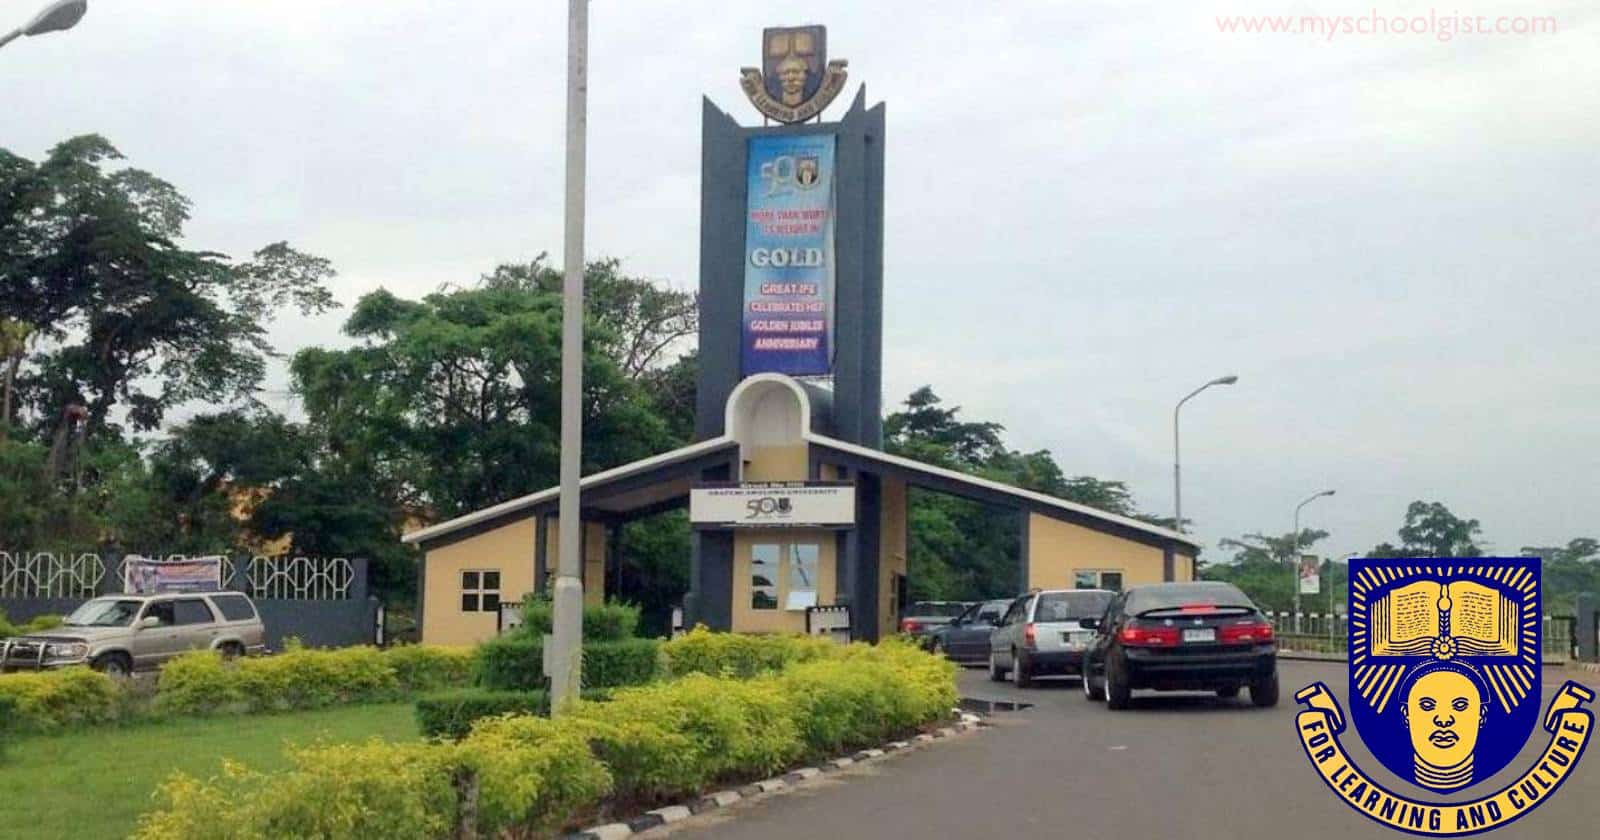 Obafemi Awolowo University (OAU) Pre-Degree Admission Form